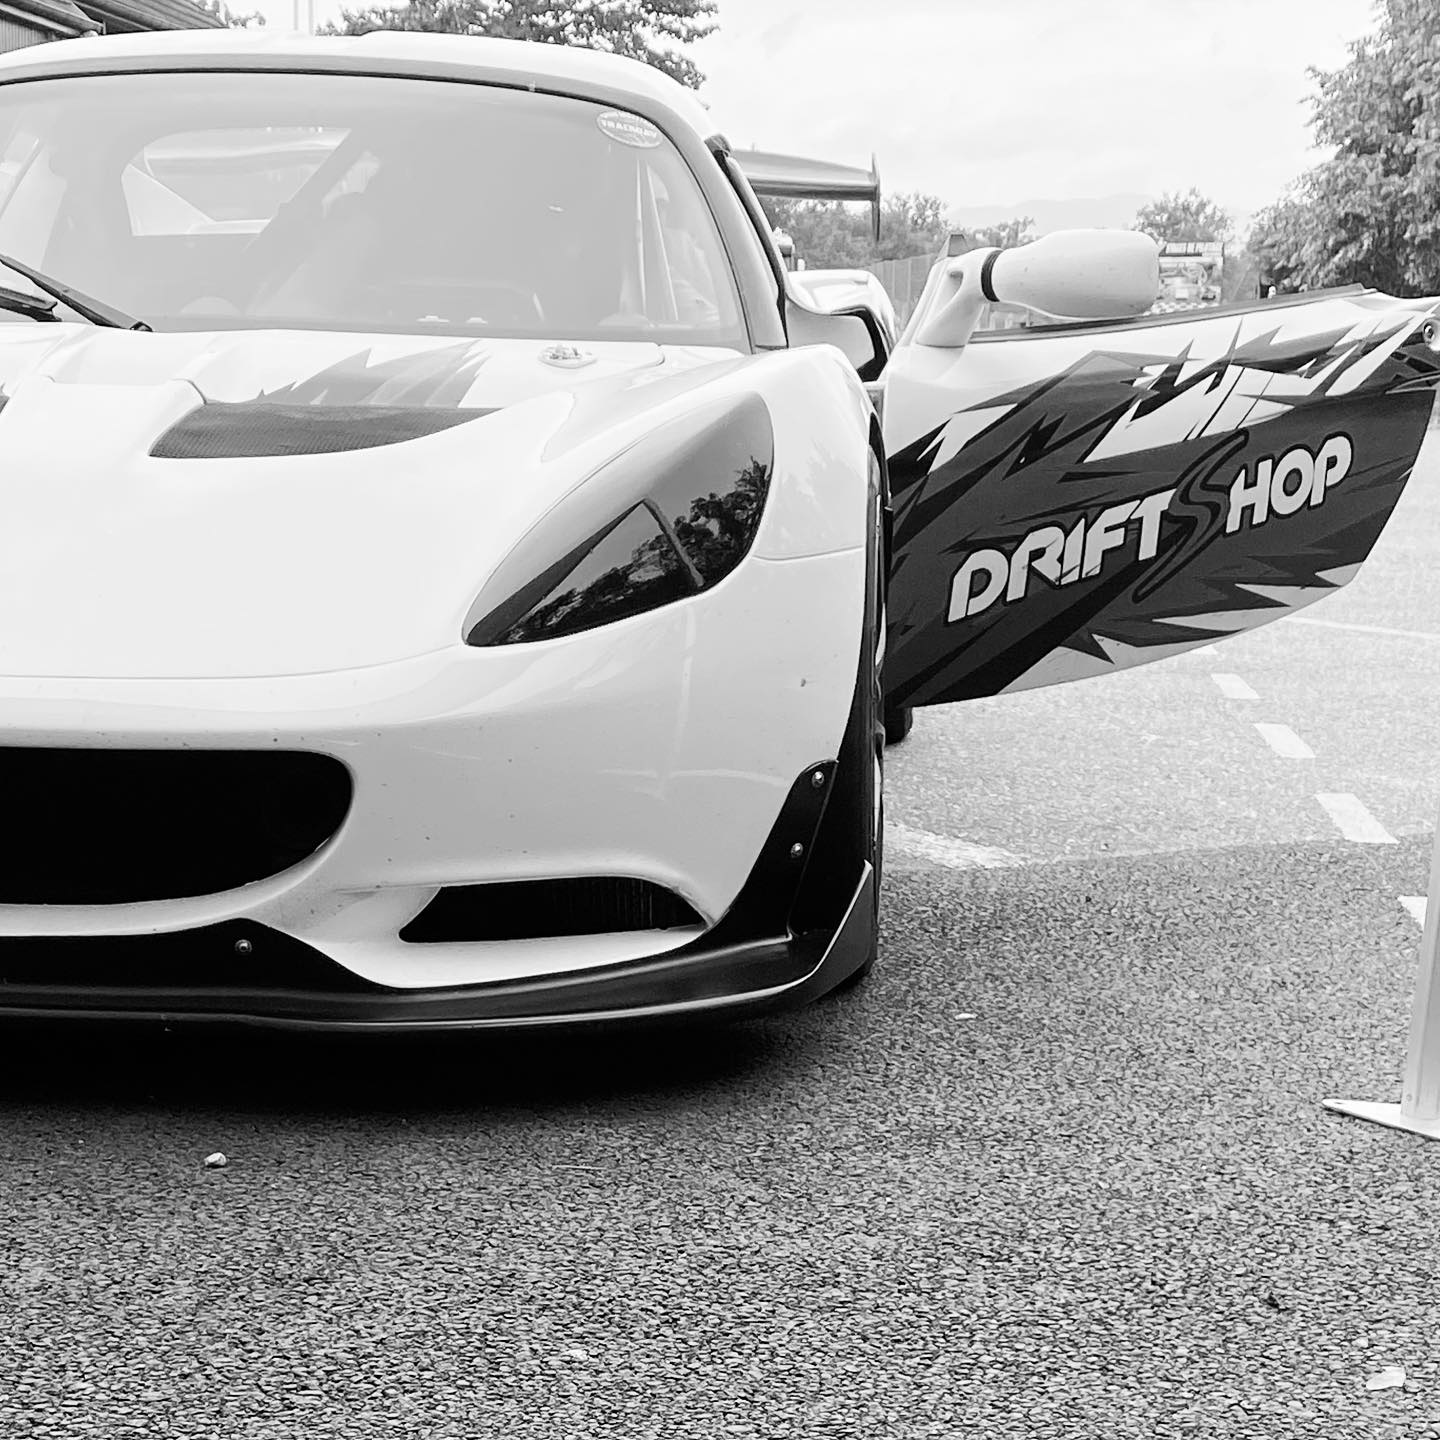 Lotus Elise DriftShop